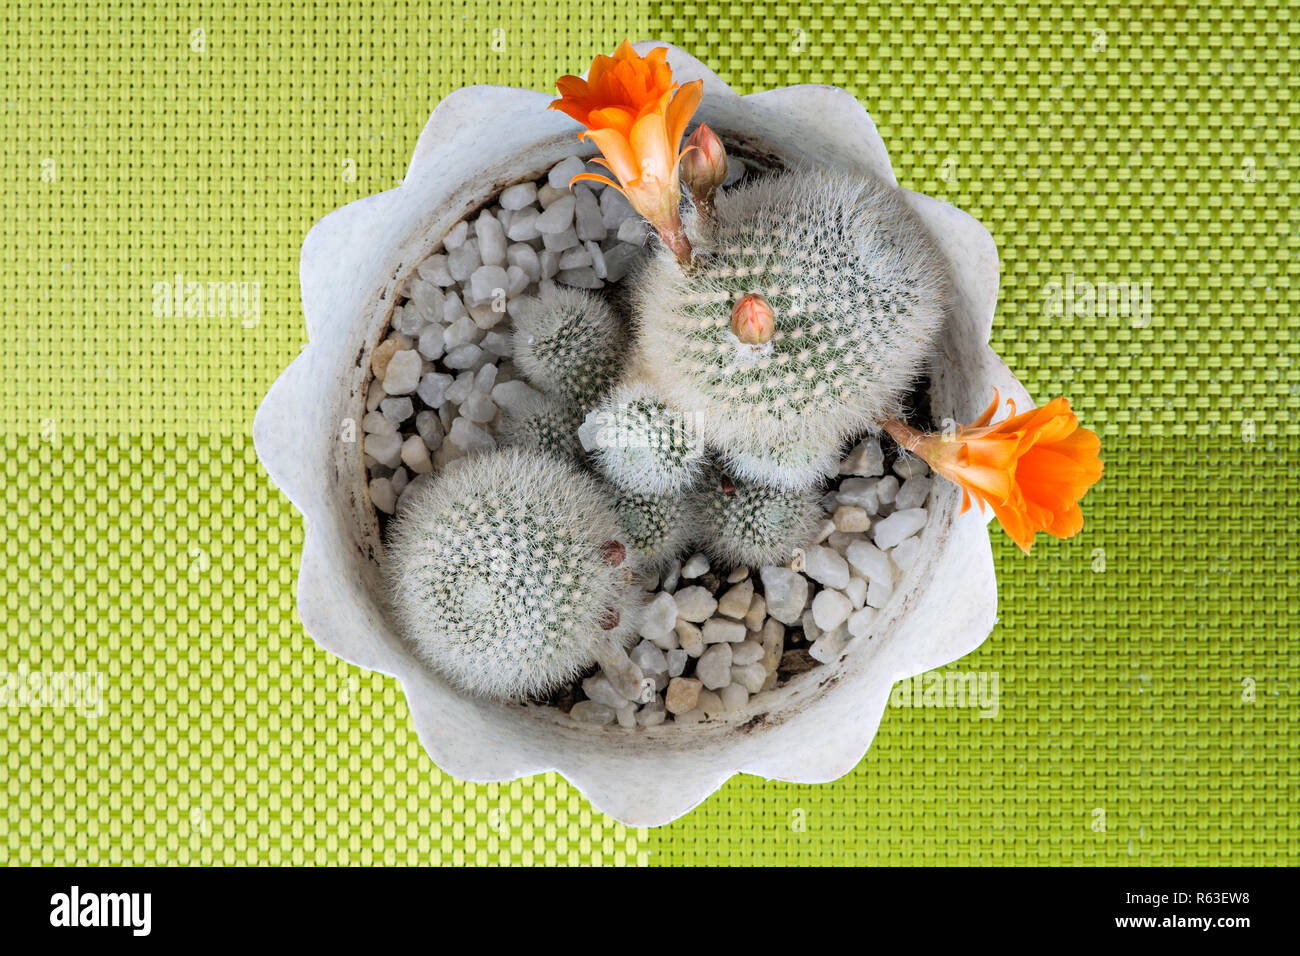 Blooming cactus with orange flowers Stock Photo